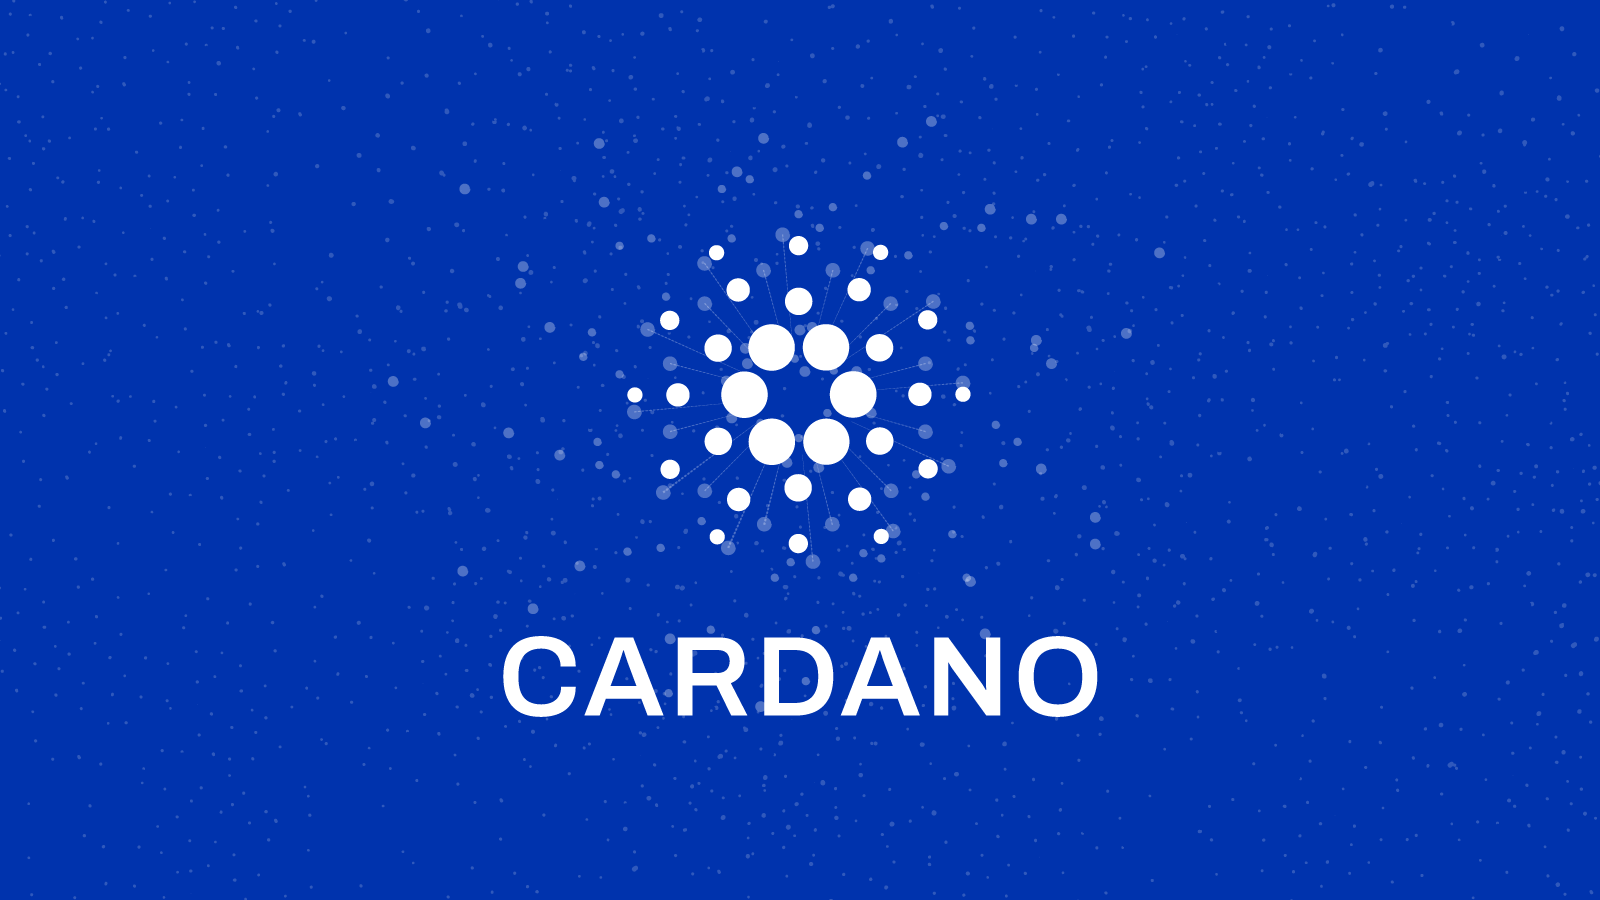 How to Mint an NFT on the Cardano Blockchain?